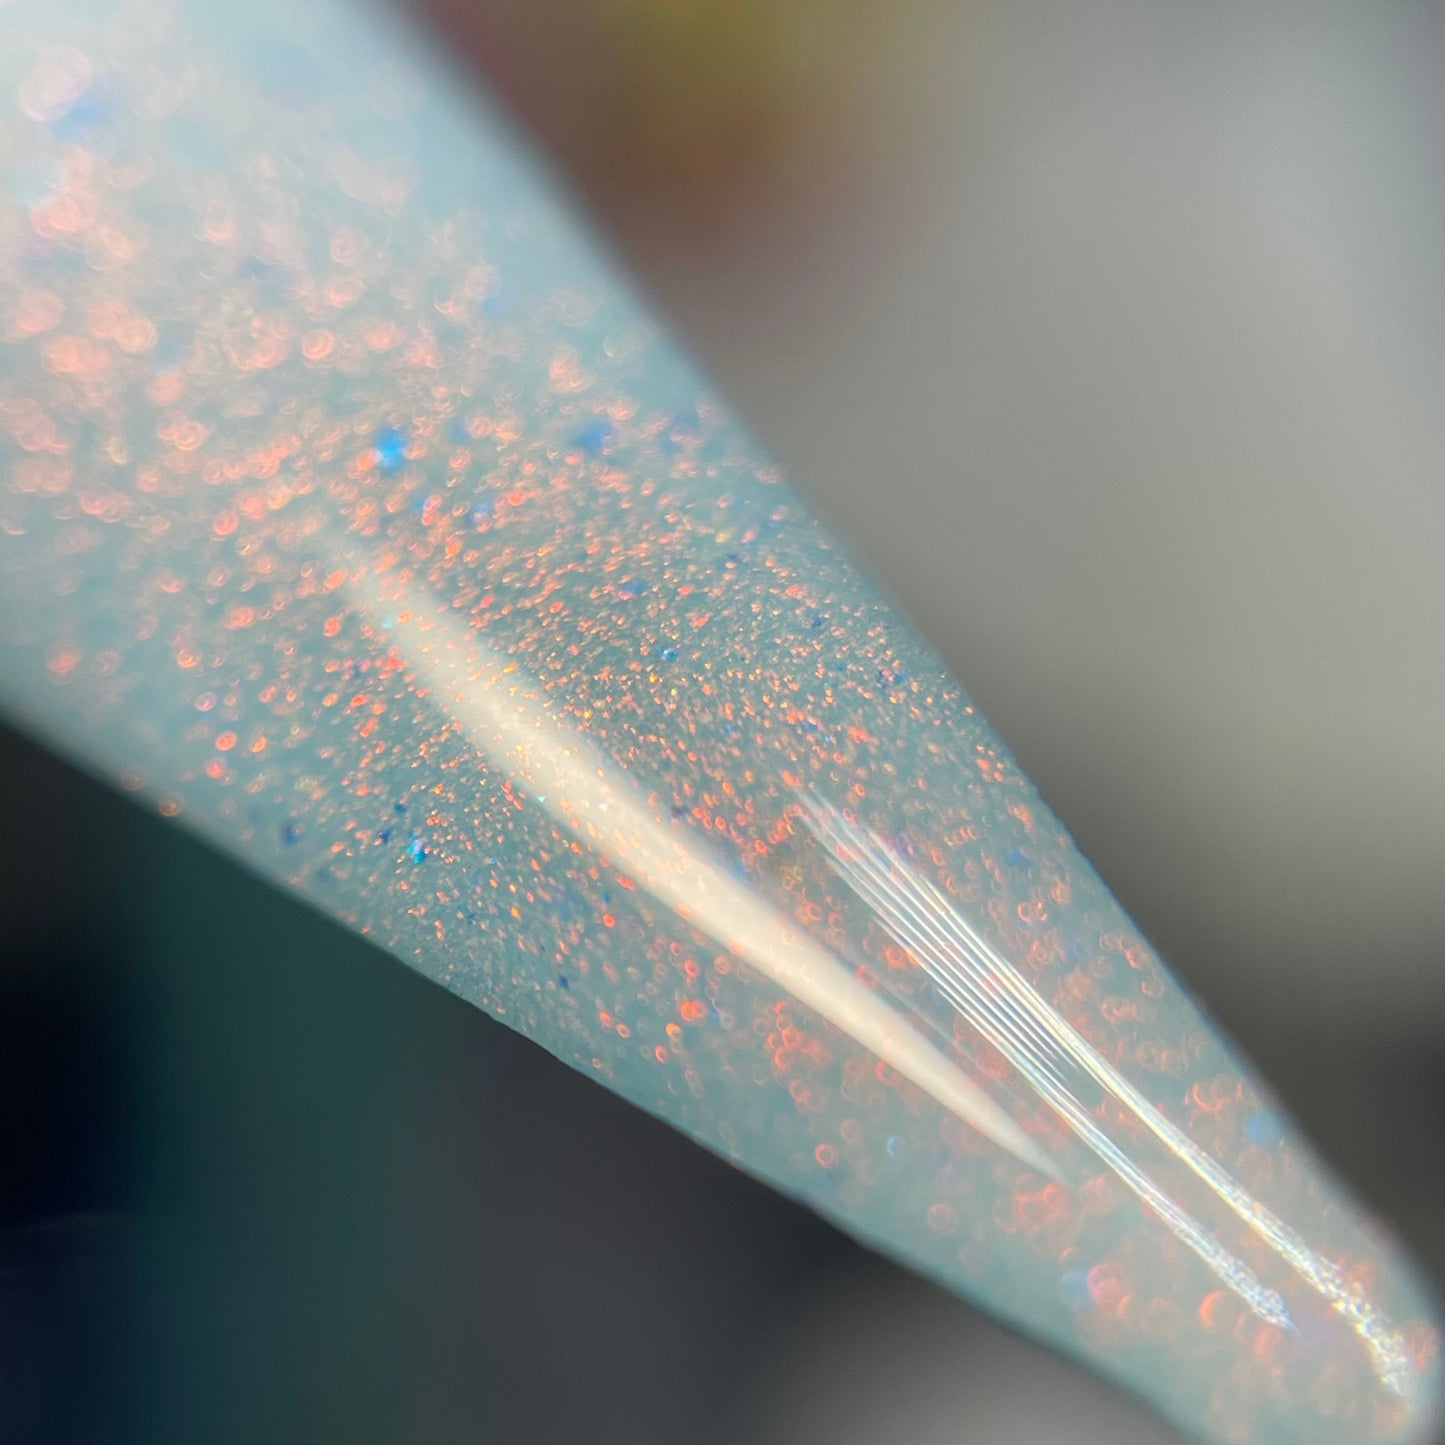 Glowberry Stream-OGUP,Unicorn Pigment-GITD